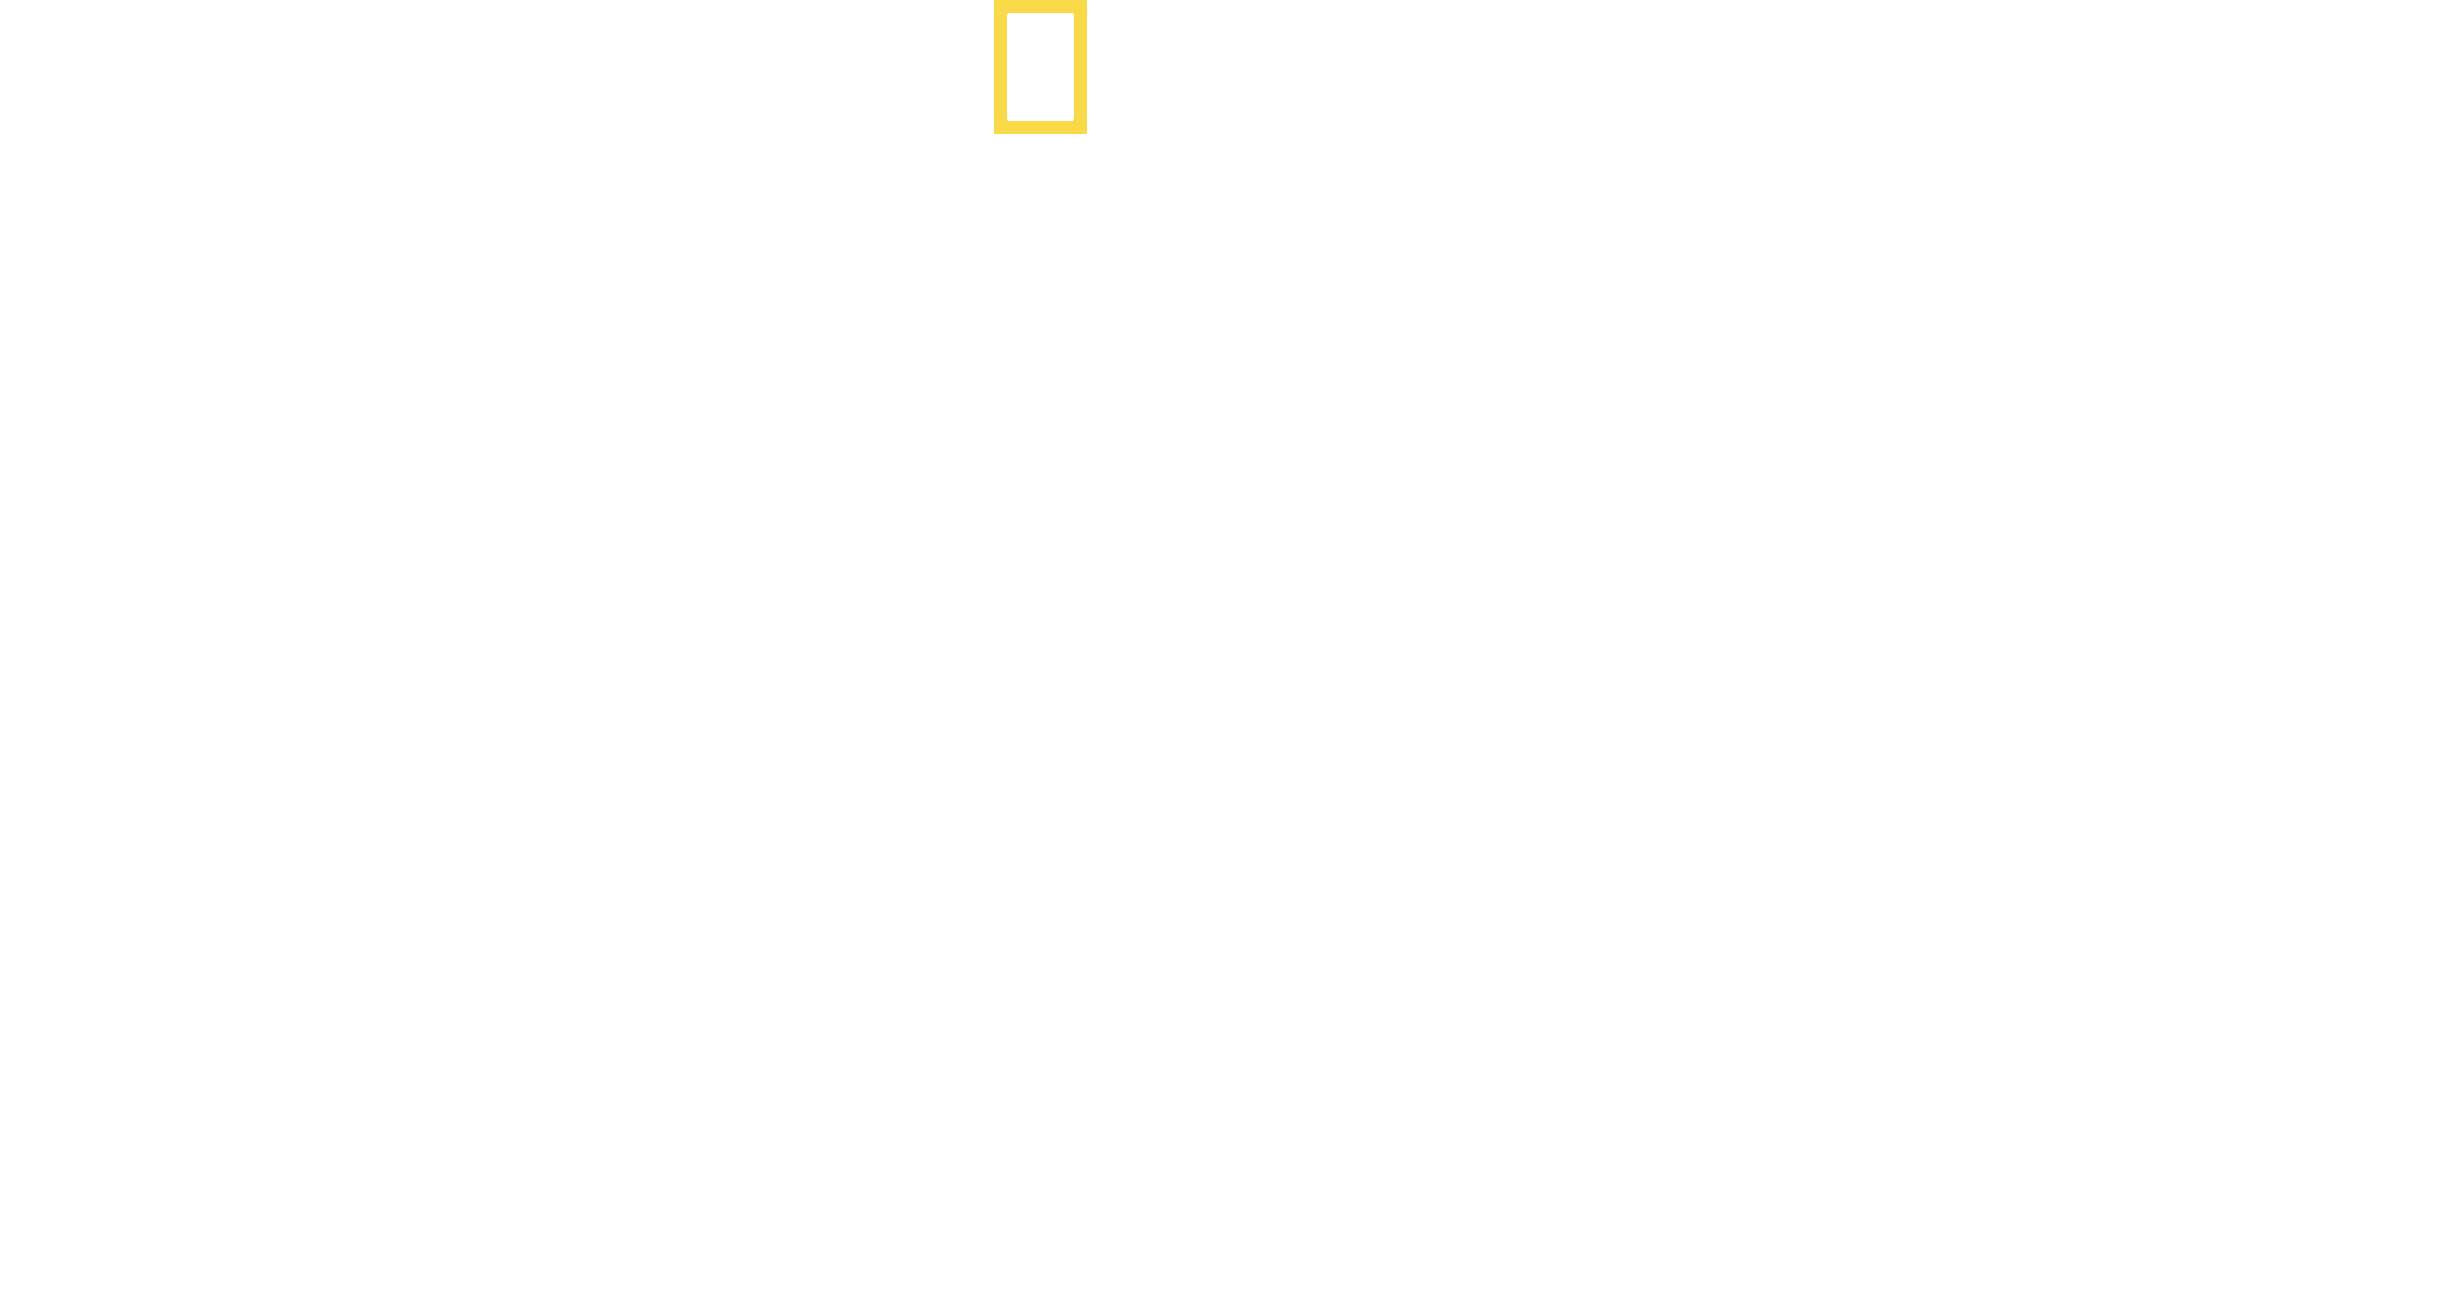 Sharks vs. Dolphins: Blood Battle logo